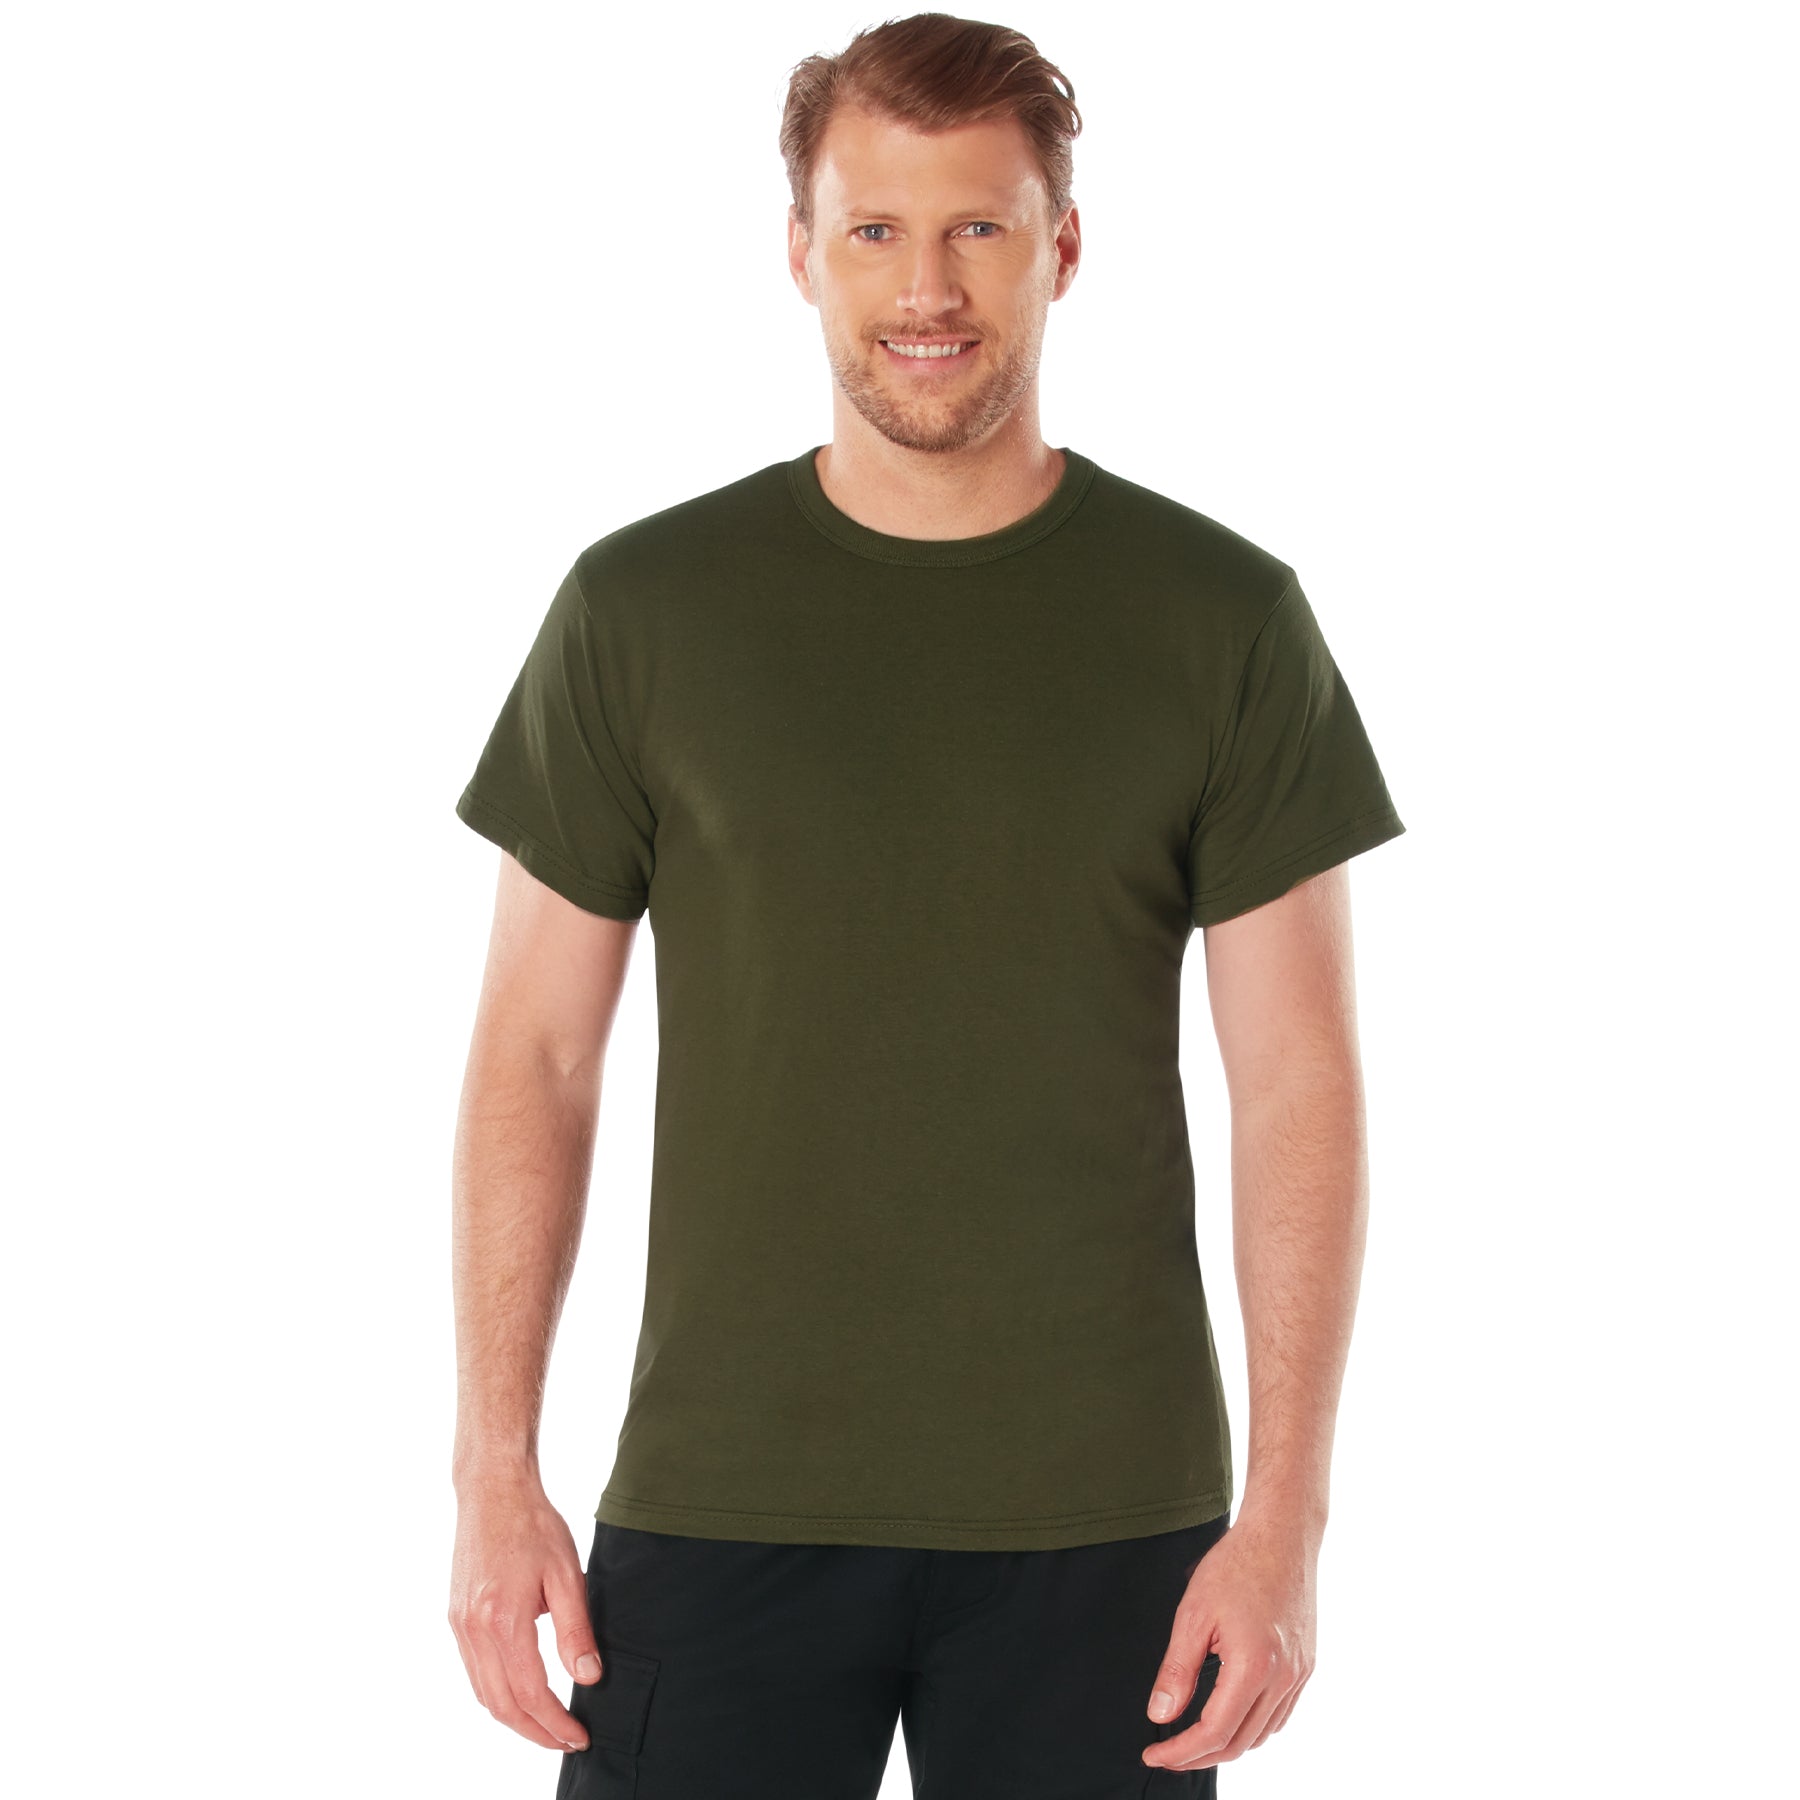 [AR 670-1][Military] Cotton T-Shirts Olive Drab